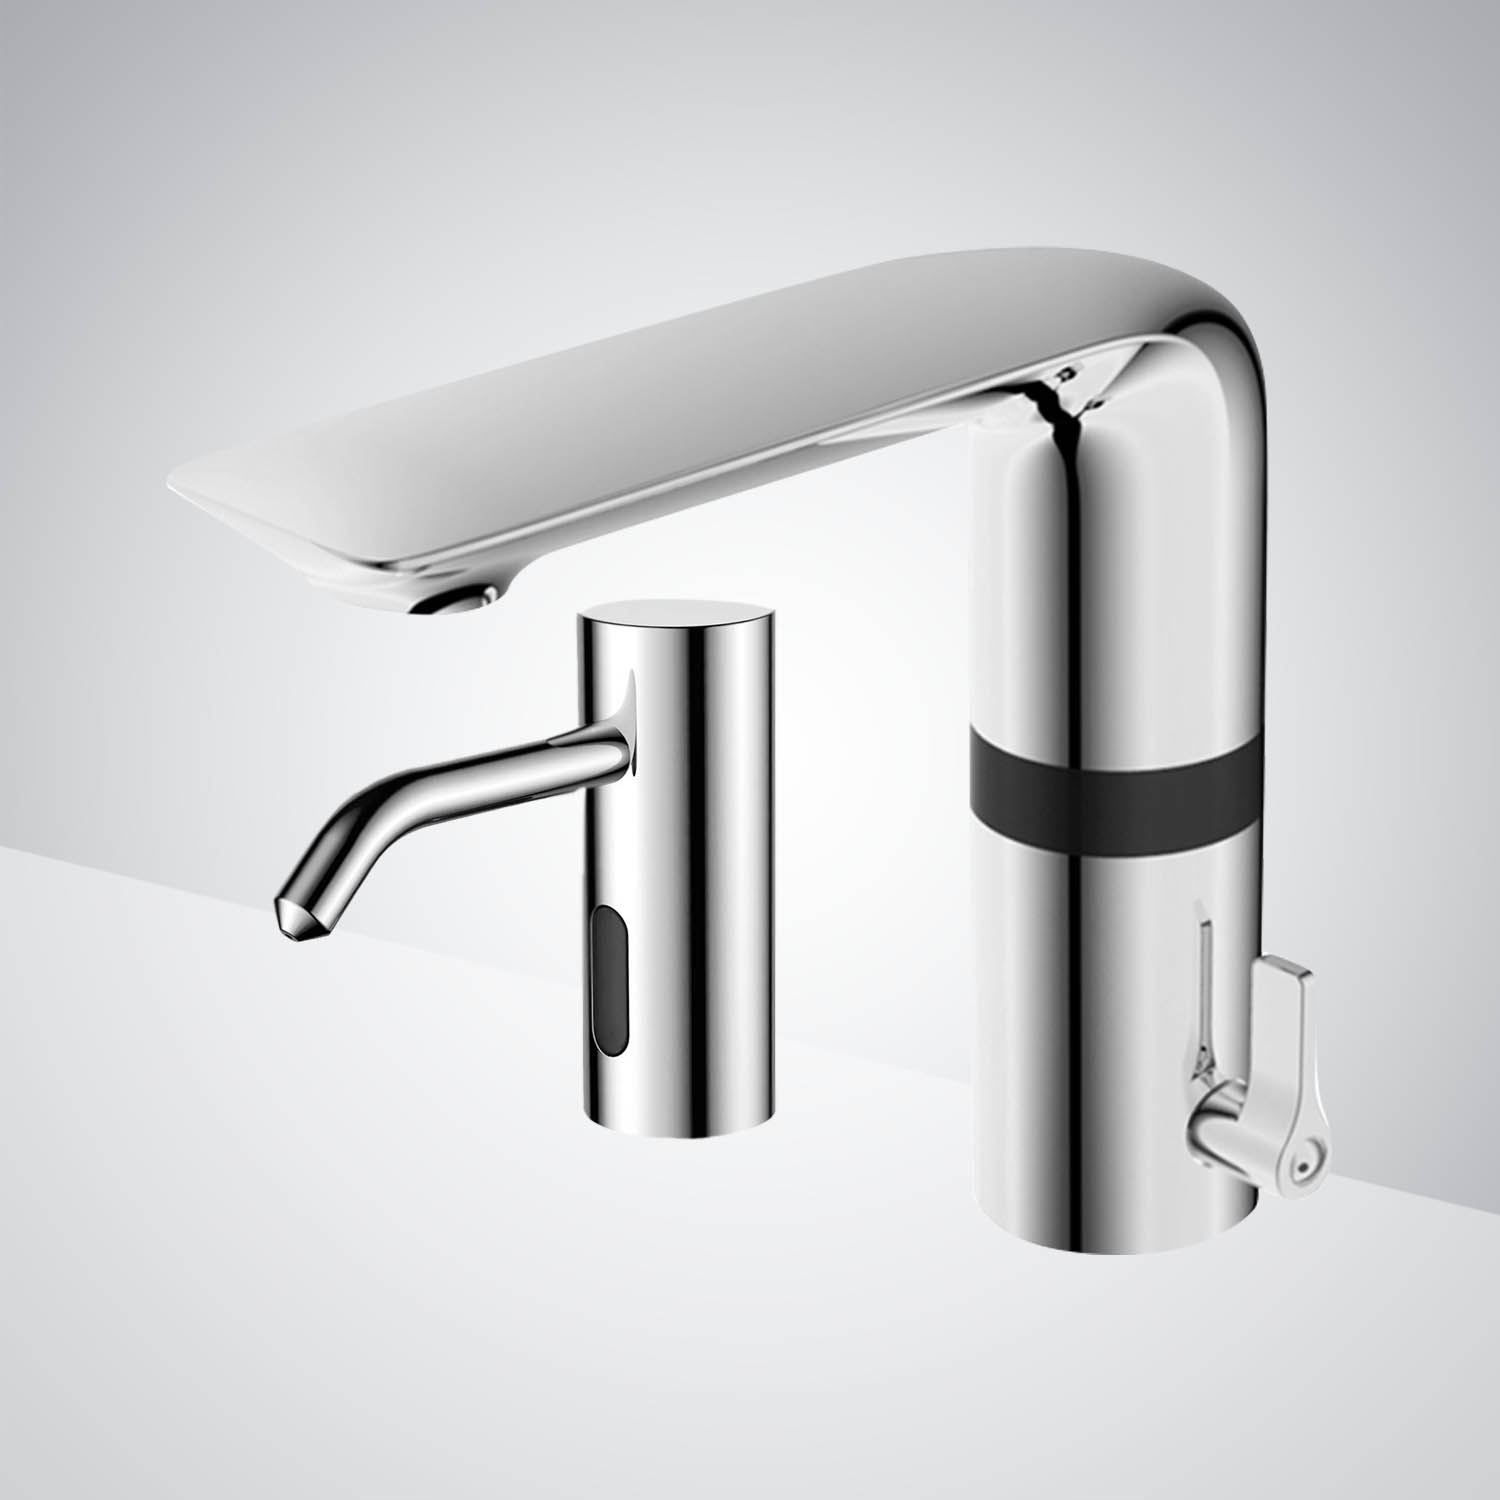 Fontana Deauville Hands-Free Chrome Motion Sensor Faucet & Automatic Liquid Soap Dispenser for Restrooms